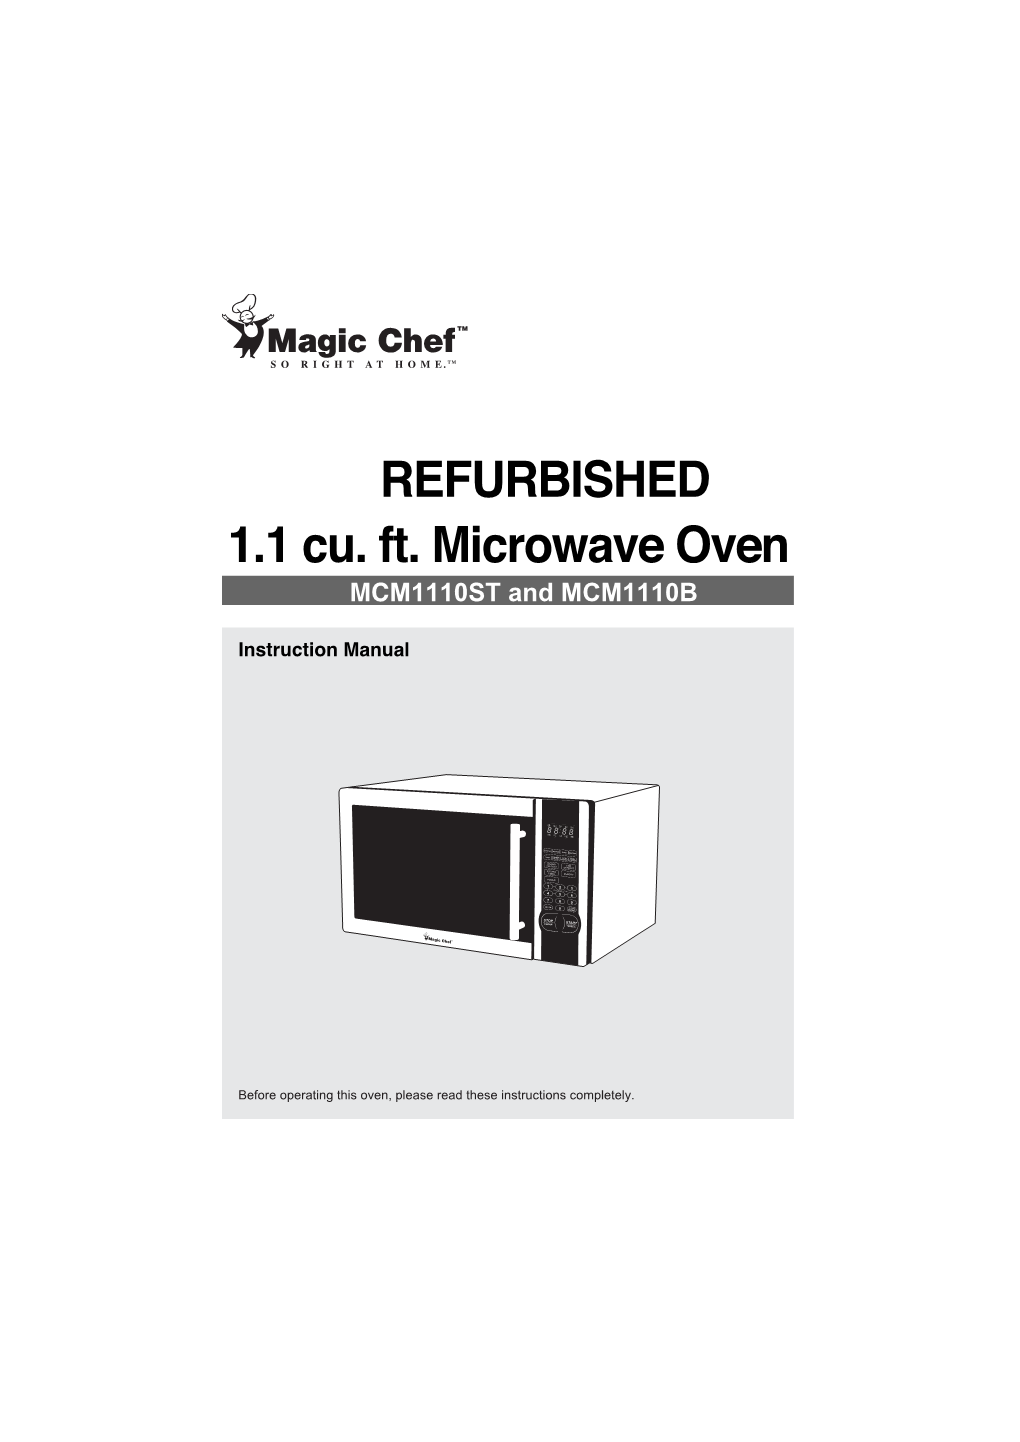 1. Cu. Ft. Microwave Oven 1 REFURBISHED